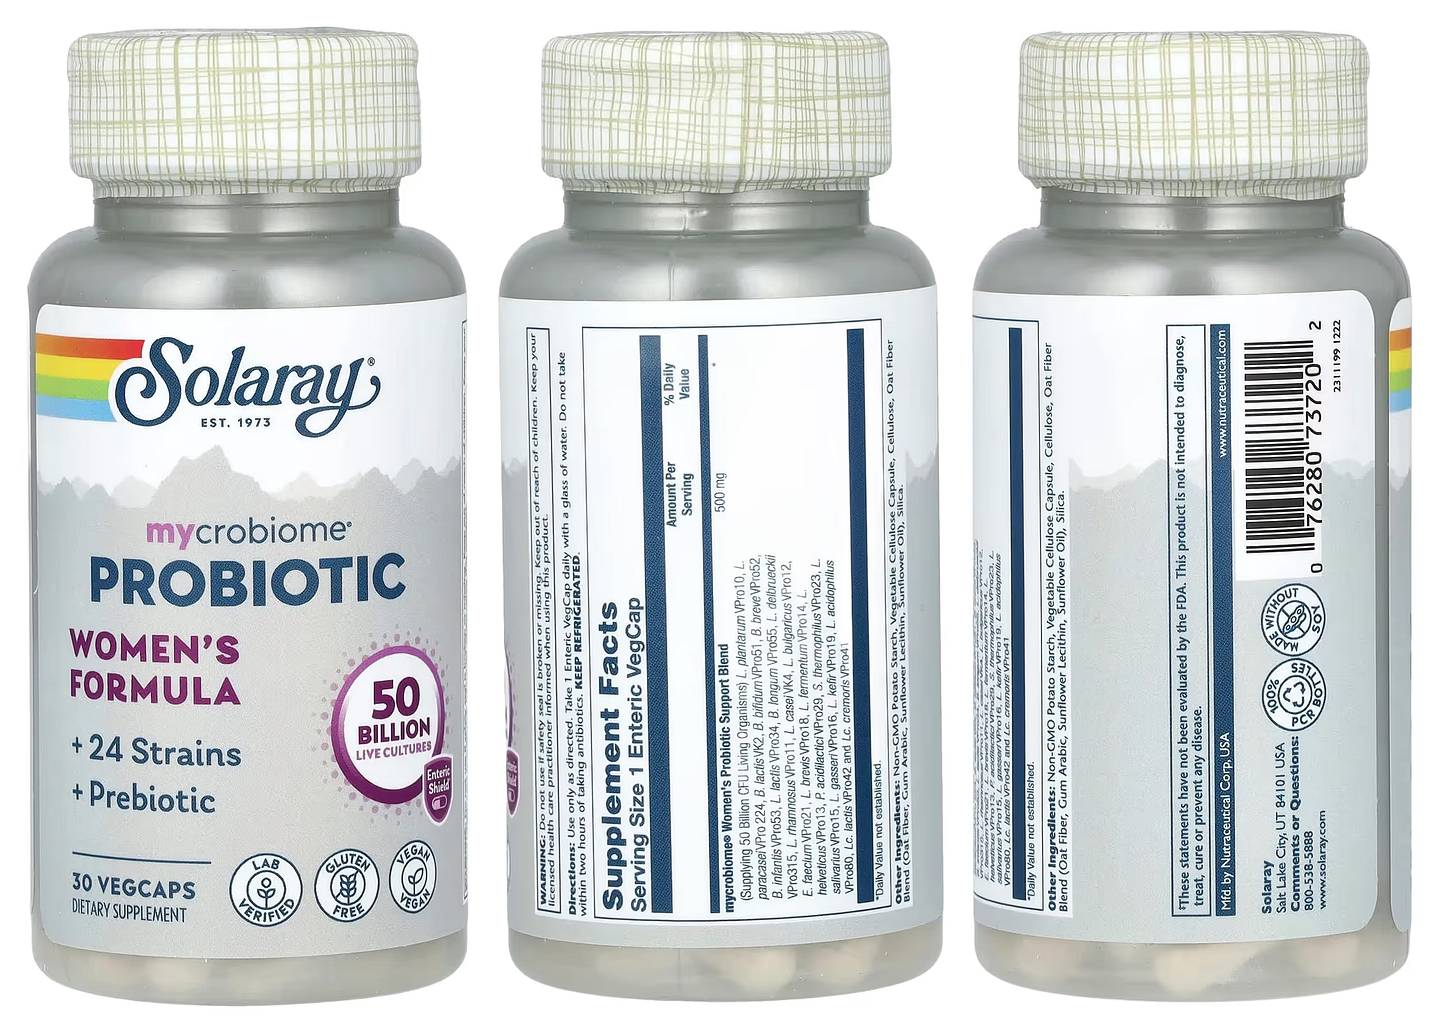 Solaray, Mycrobiome packaging